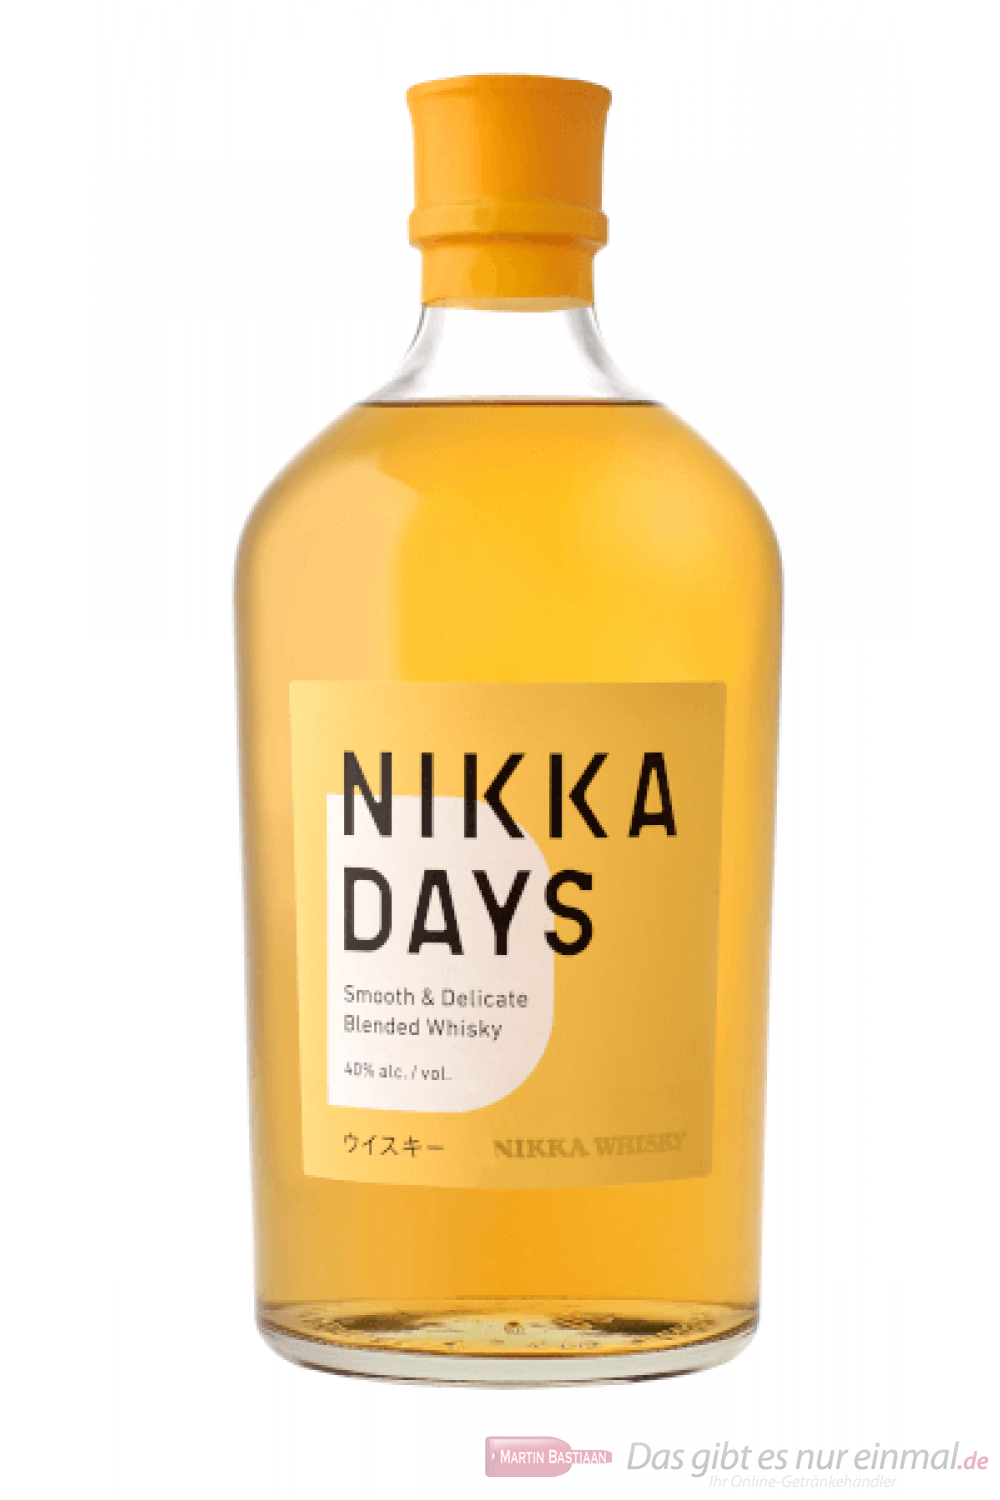 Nikka Days Smoth & Delicate